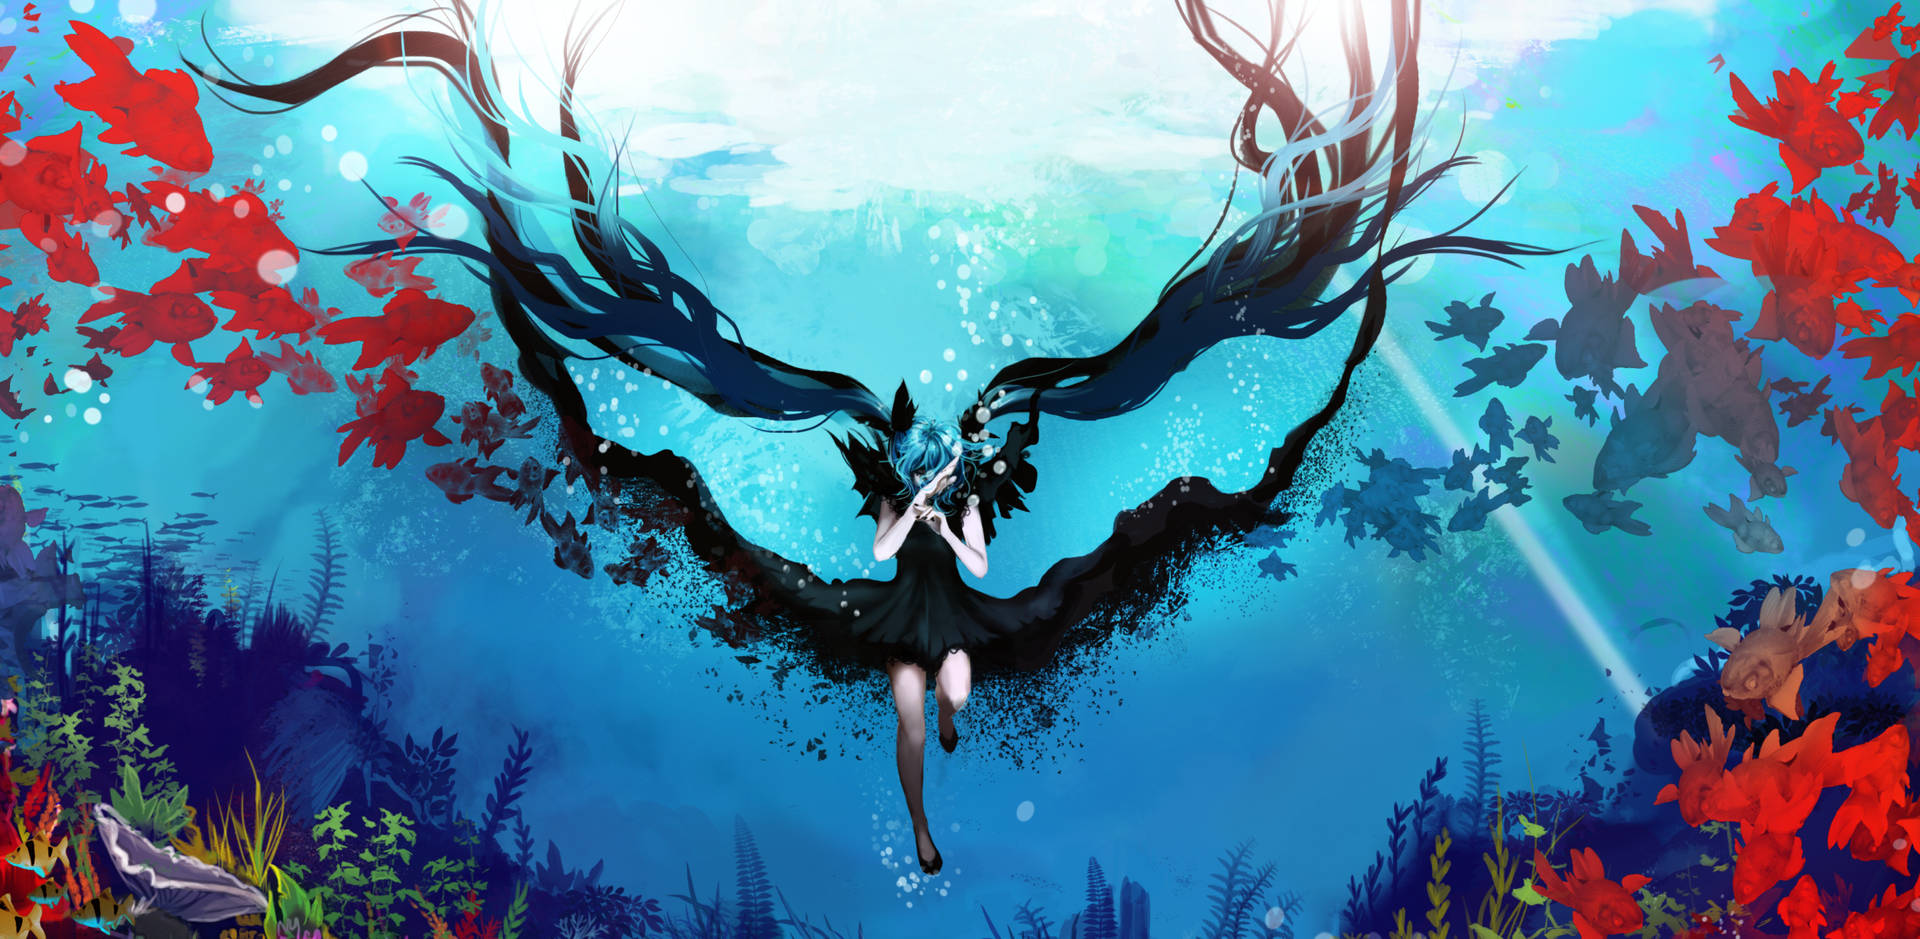 Hatsune Miku 2725X1332 Wallpaper and Background Image